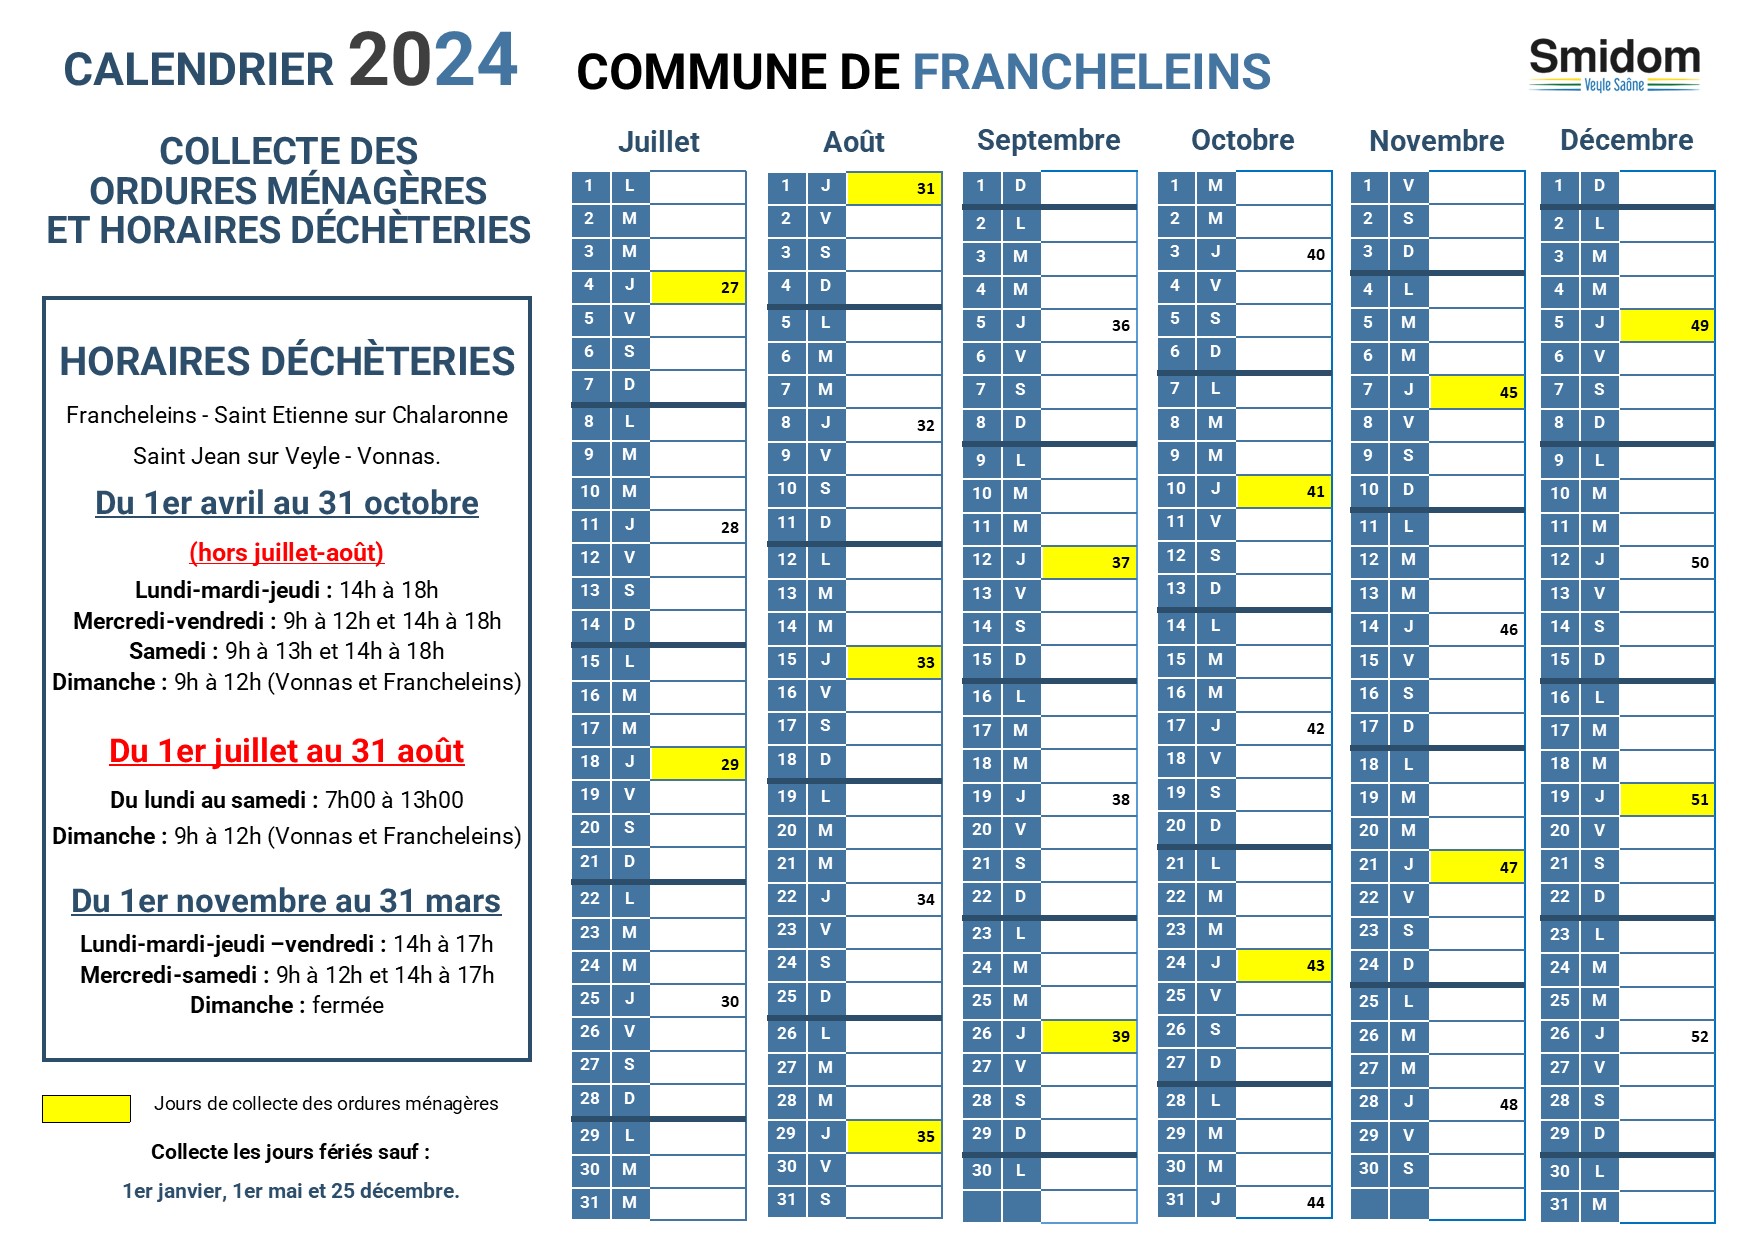 FRANCHELEINS - Calendrier 2024 - 2.jpg